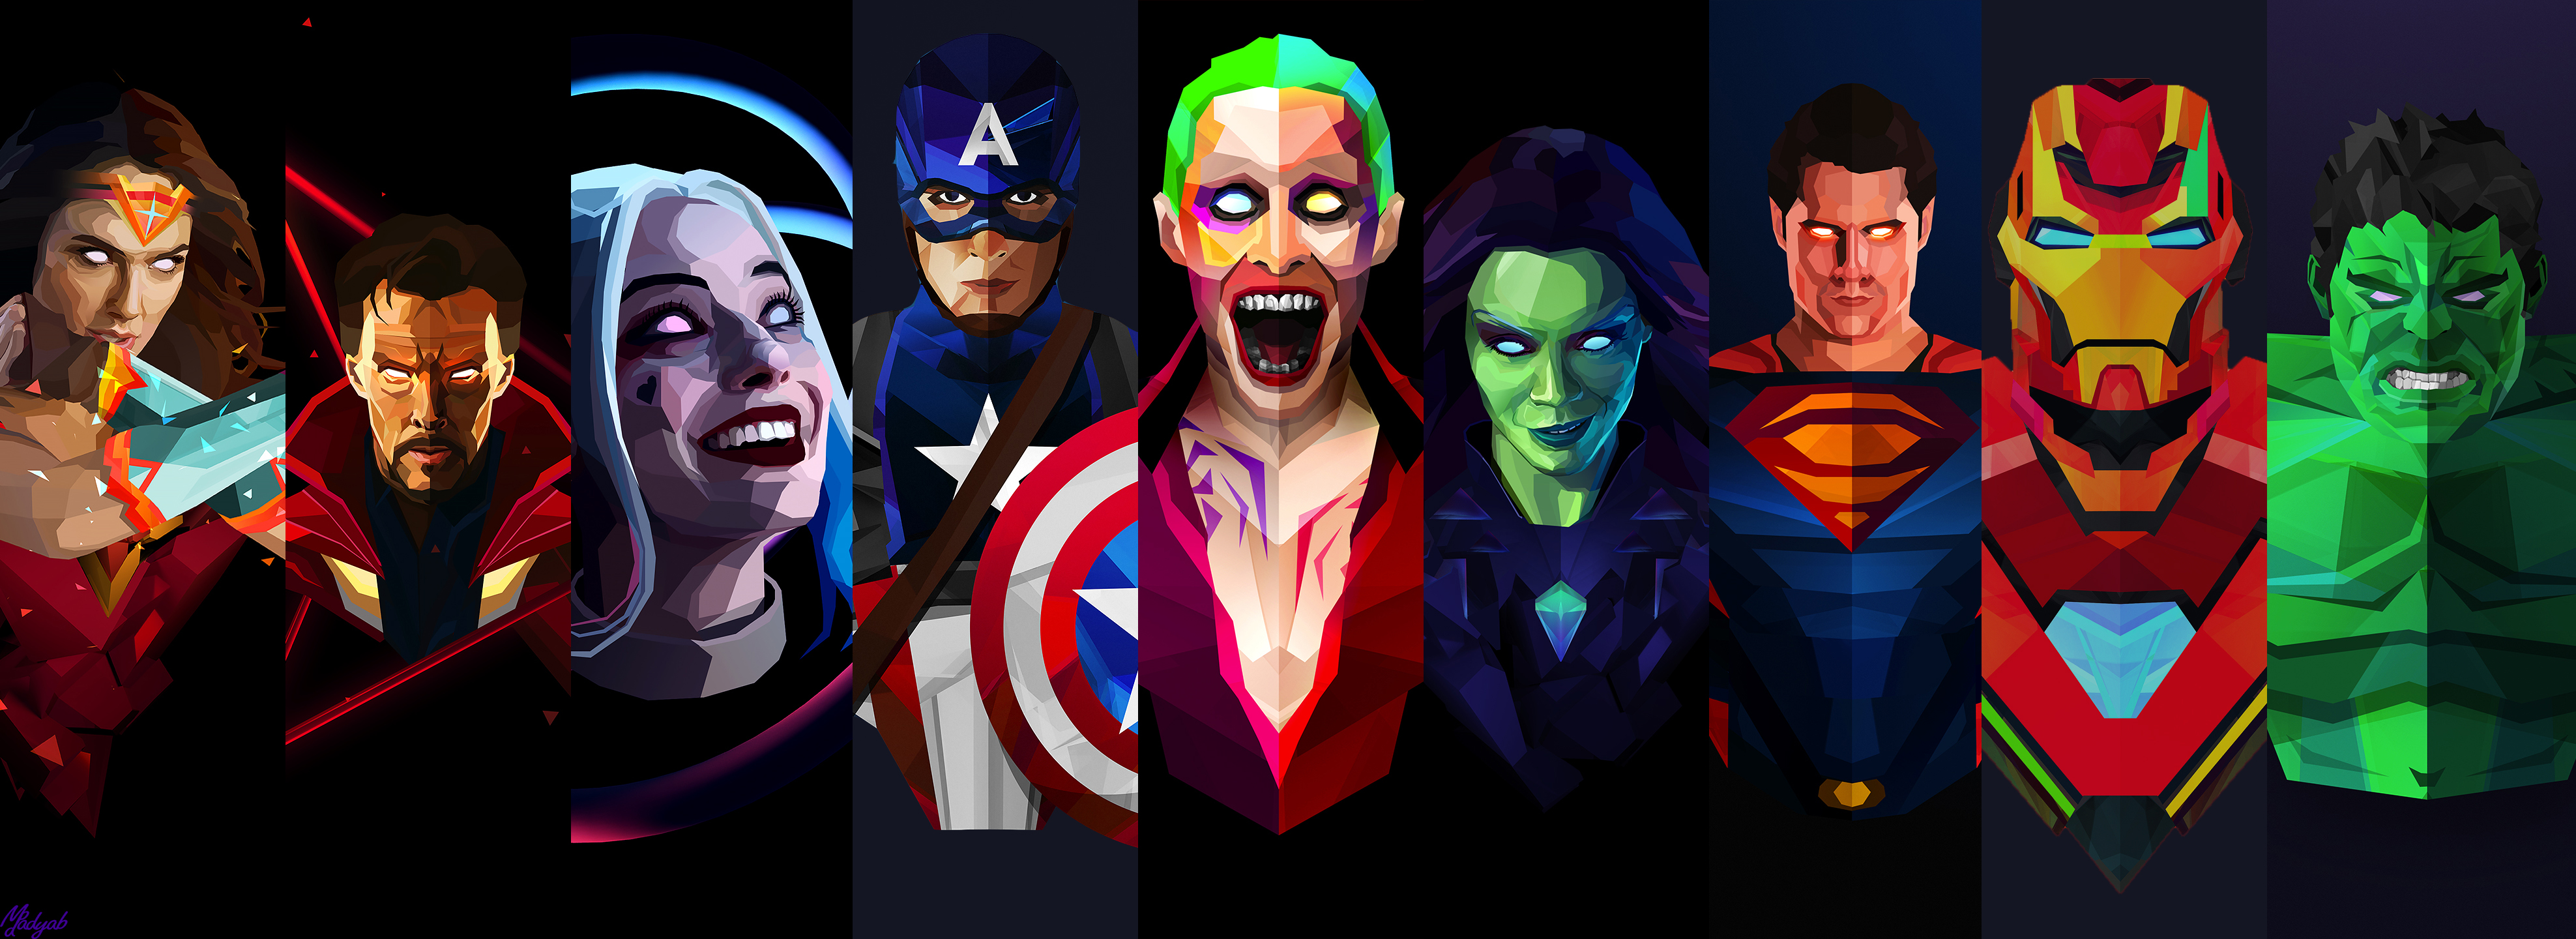 Скачать обои бесплатно Джокер, Комиксы, Железный Человек, Капитан Америка, Харли Квинн, Супергерой, Супермен, Чудо Женщина, Халк, Доктор Стрэндж, Гамора картинка на рабочий стол ПК